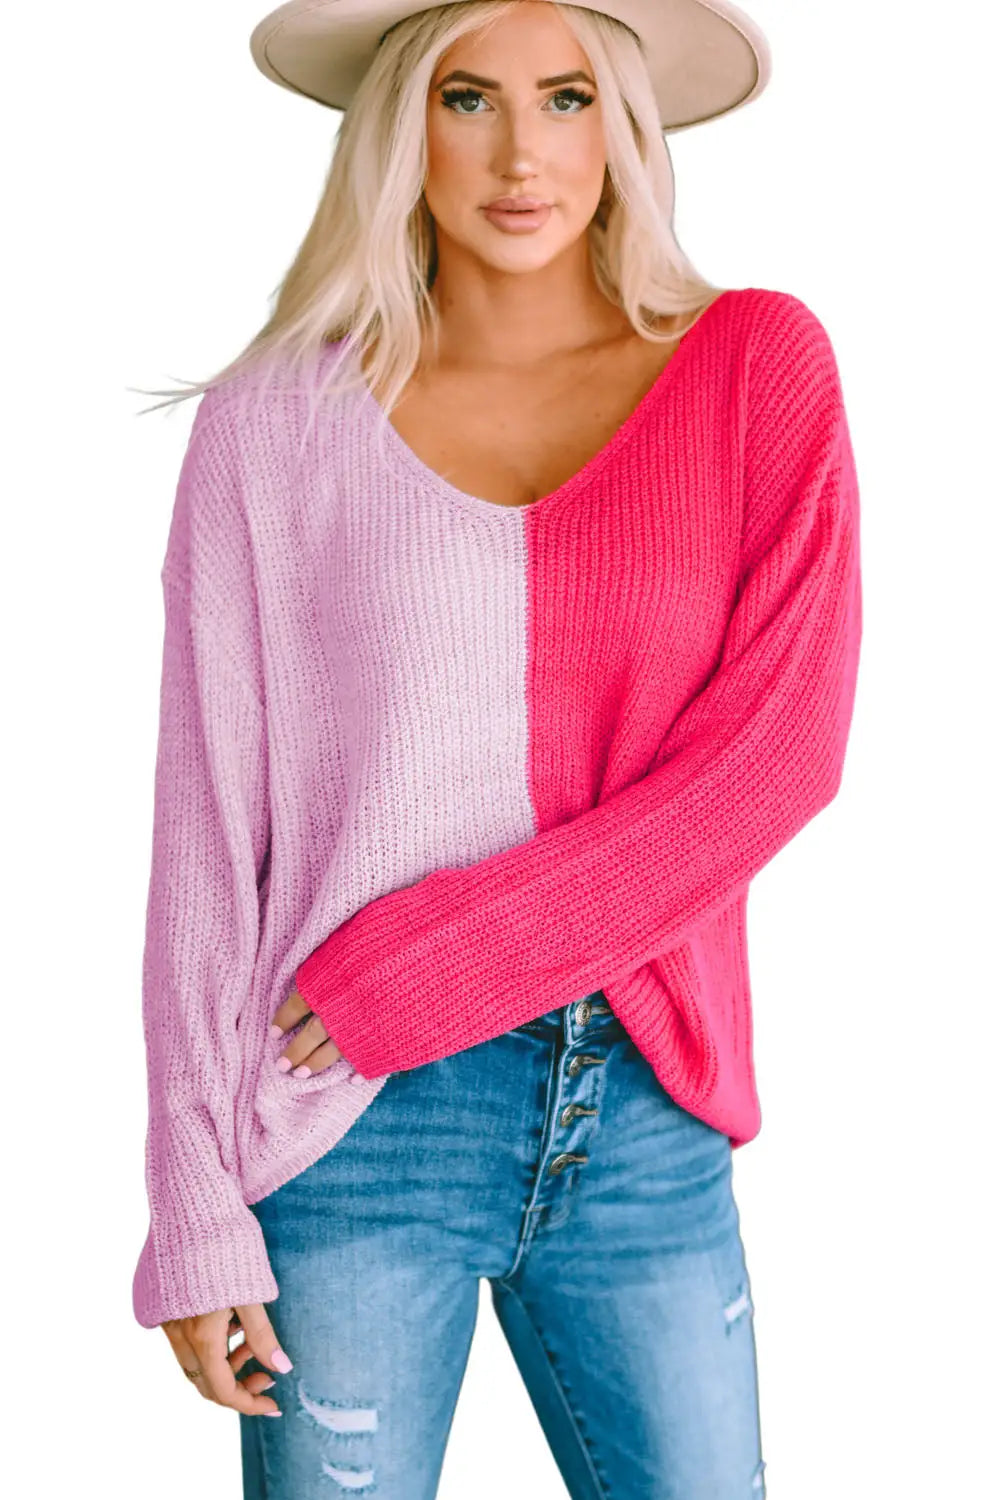 Khaki long sleeve v-neck colorblock sweater - sweaters & cardigans